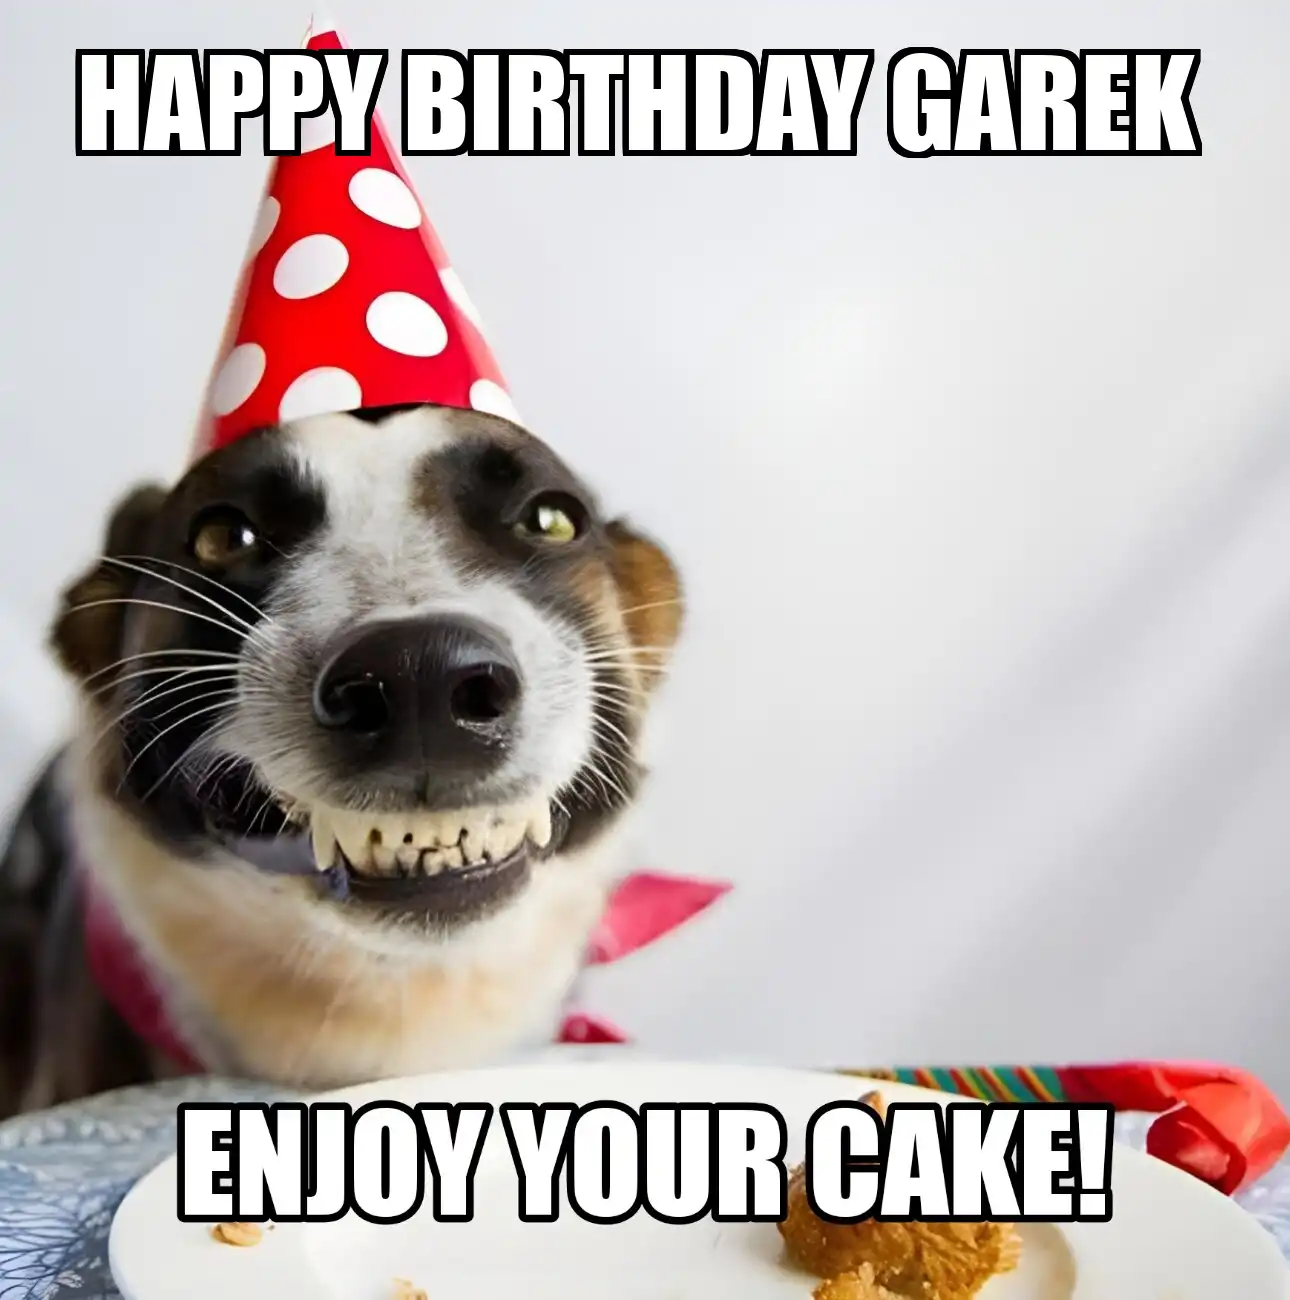 Happy Birthday Garek Enjoy Your Cake Dog Meme